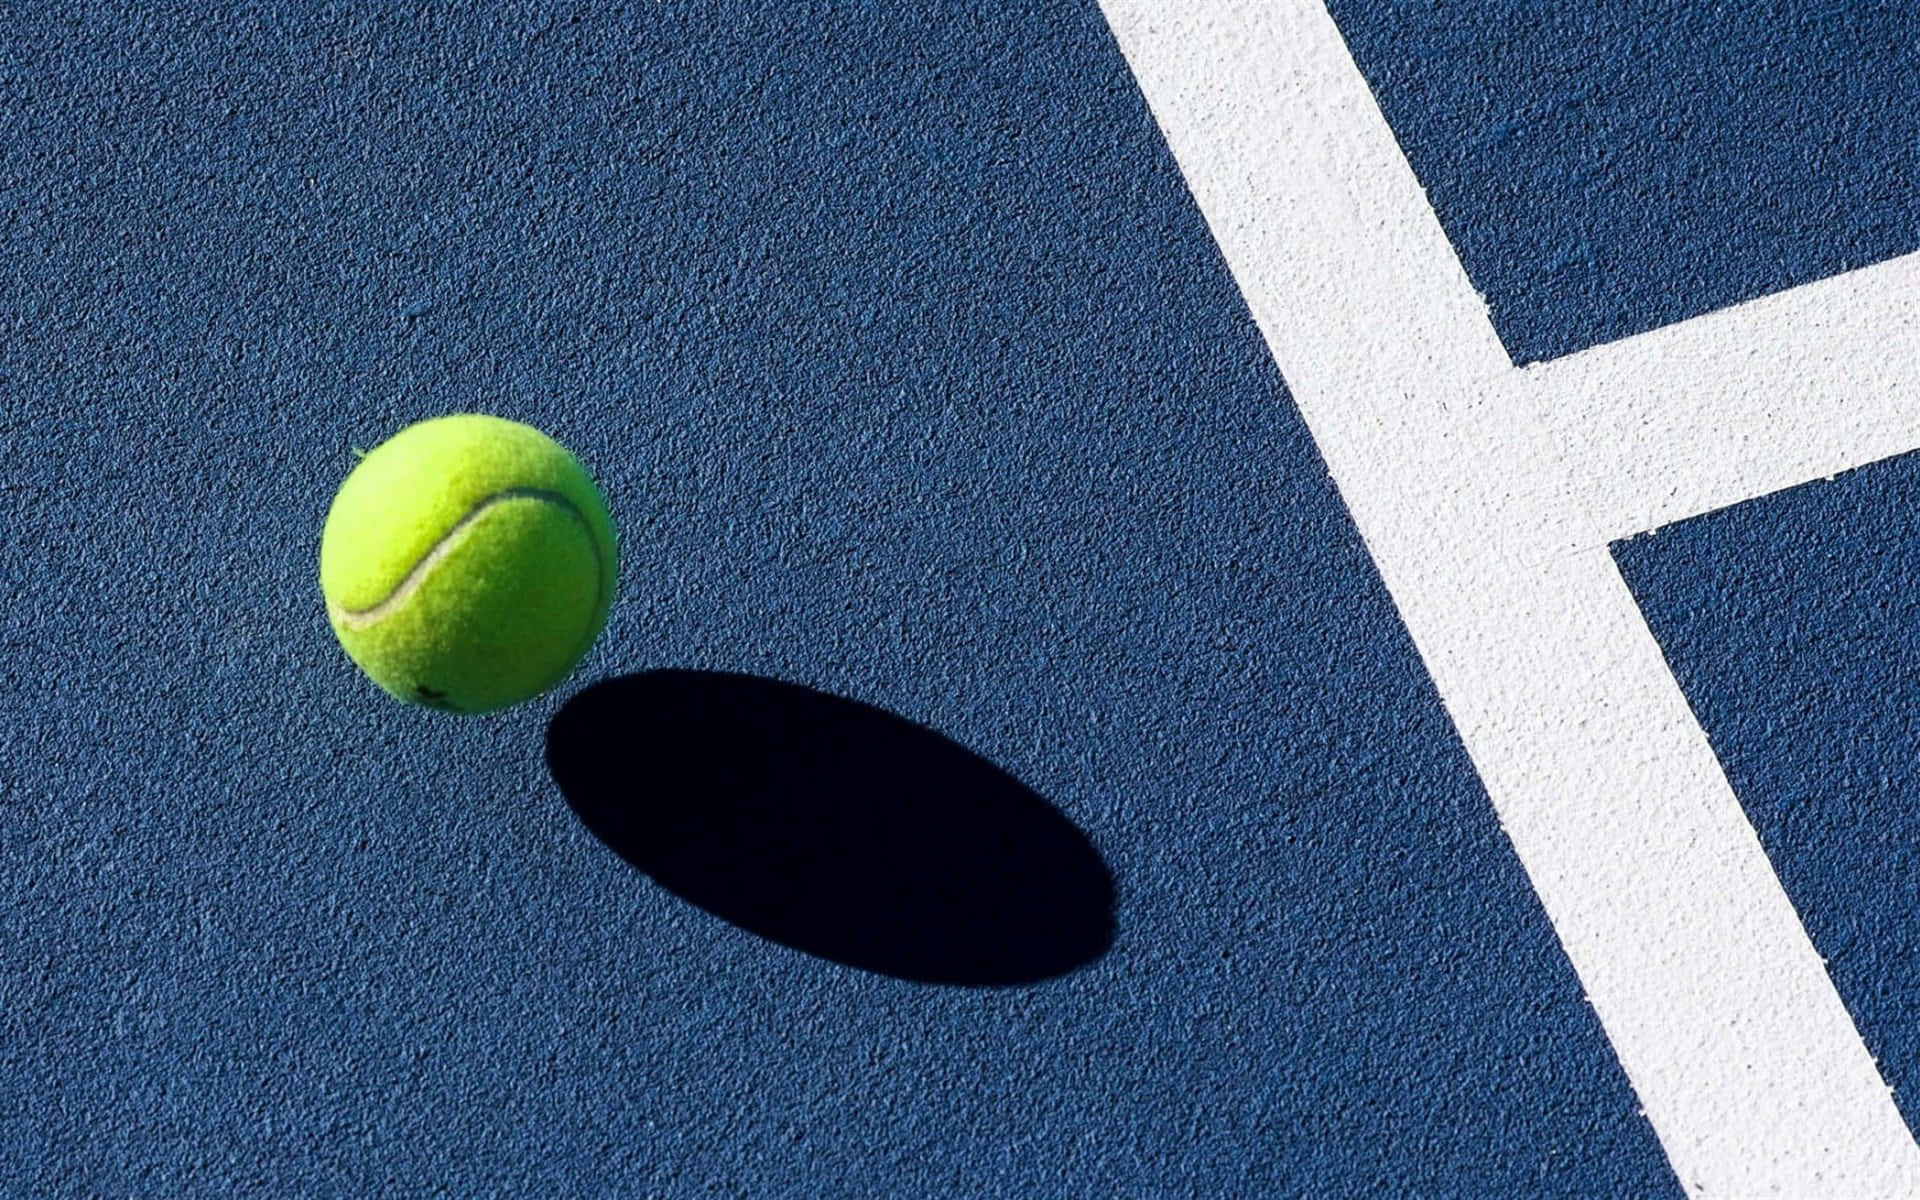 Unapelota De Tenis En Una Cancha De Tenis Azul